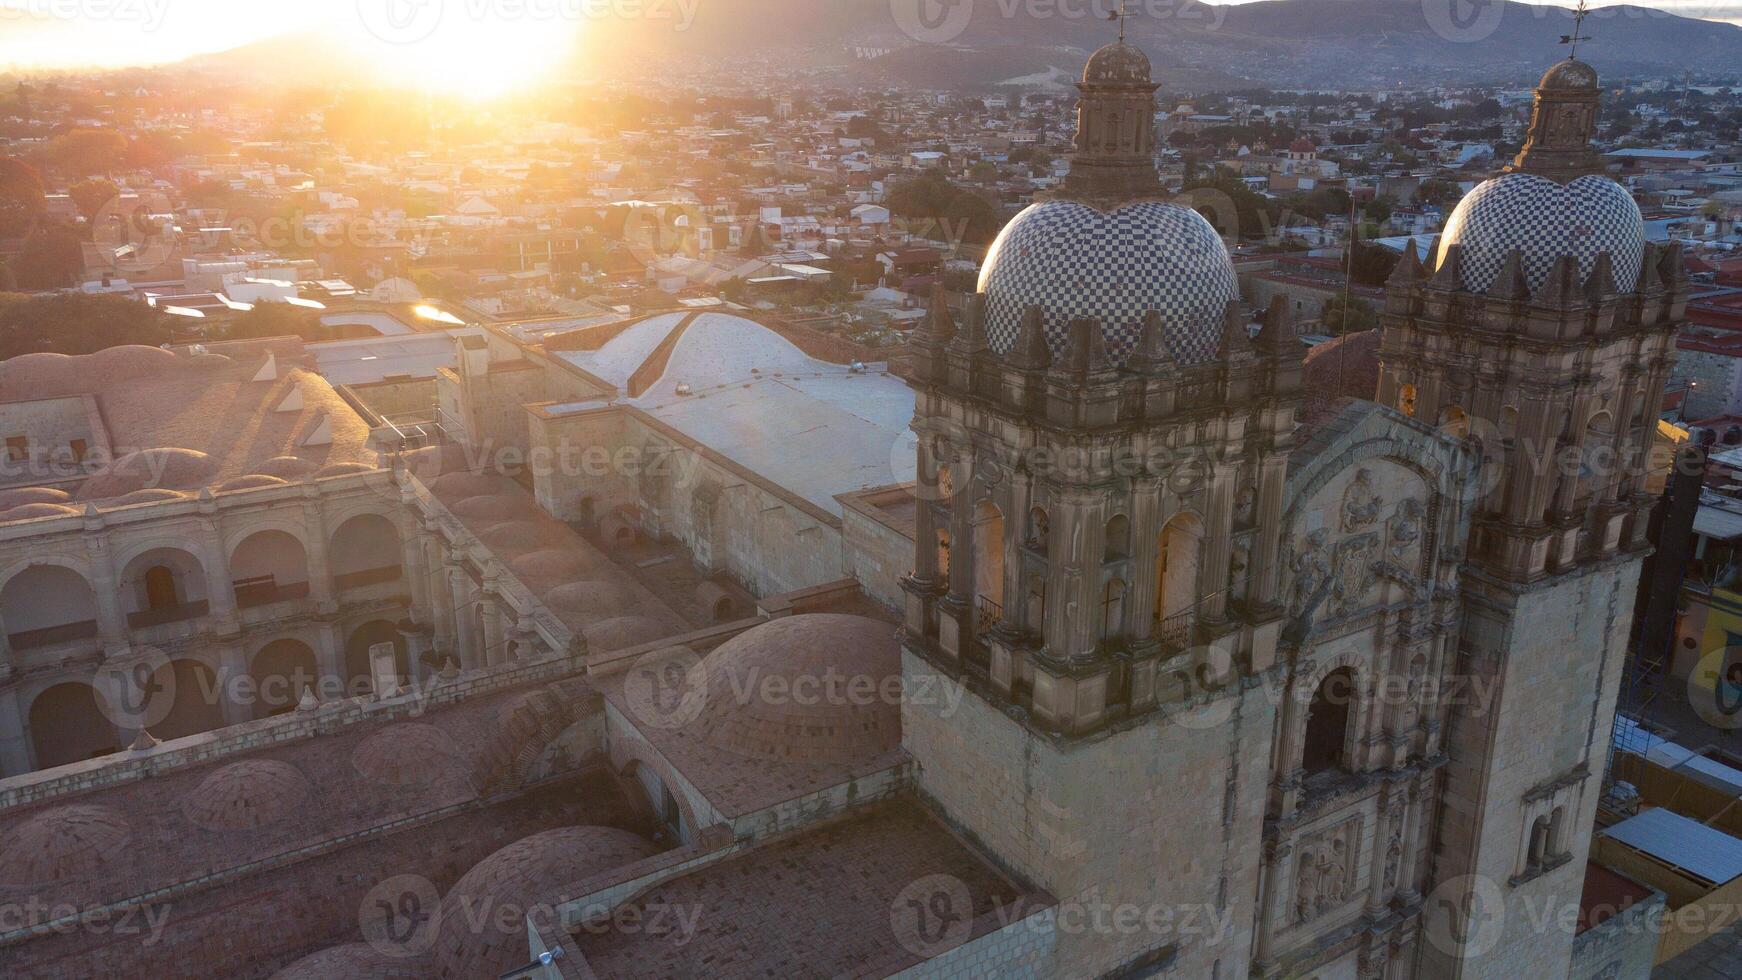 santo domingo Igreja dentro oaxaca, México, às pôr do sol zangão Visão topo foto